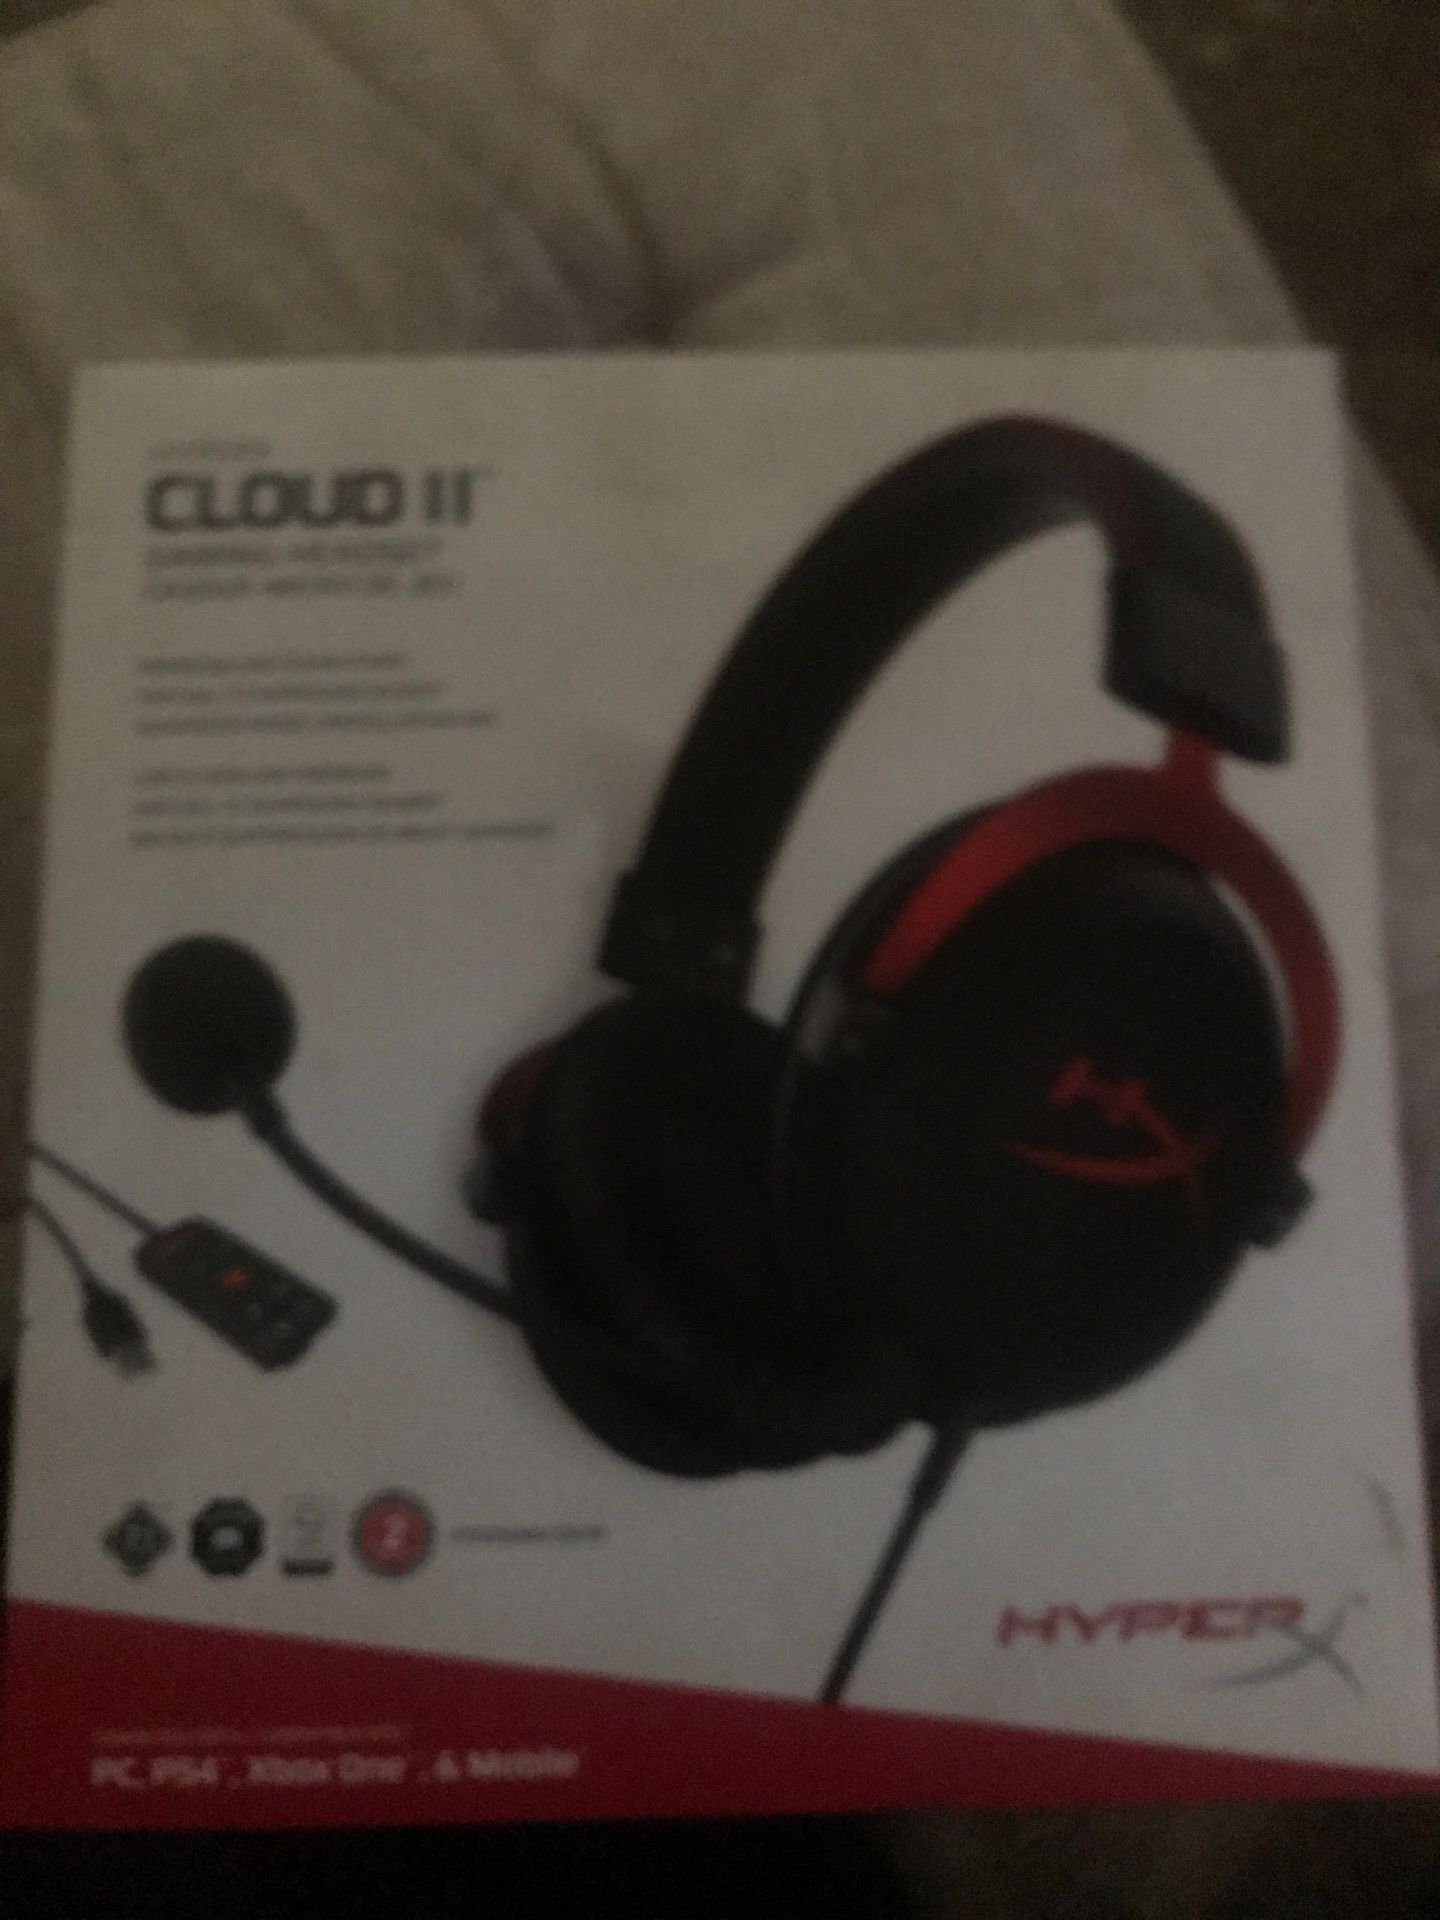 HyperX Cloud ll headset